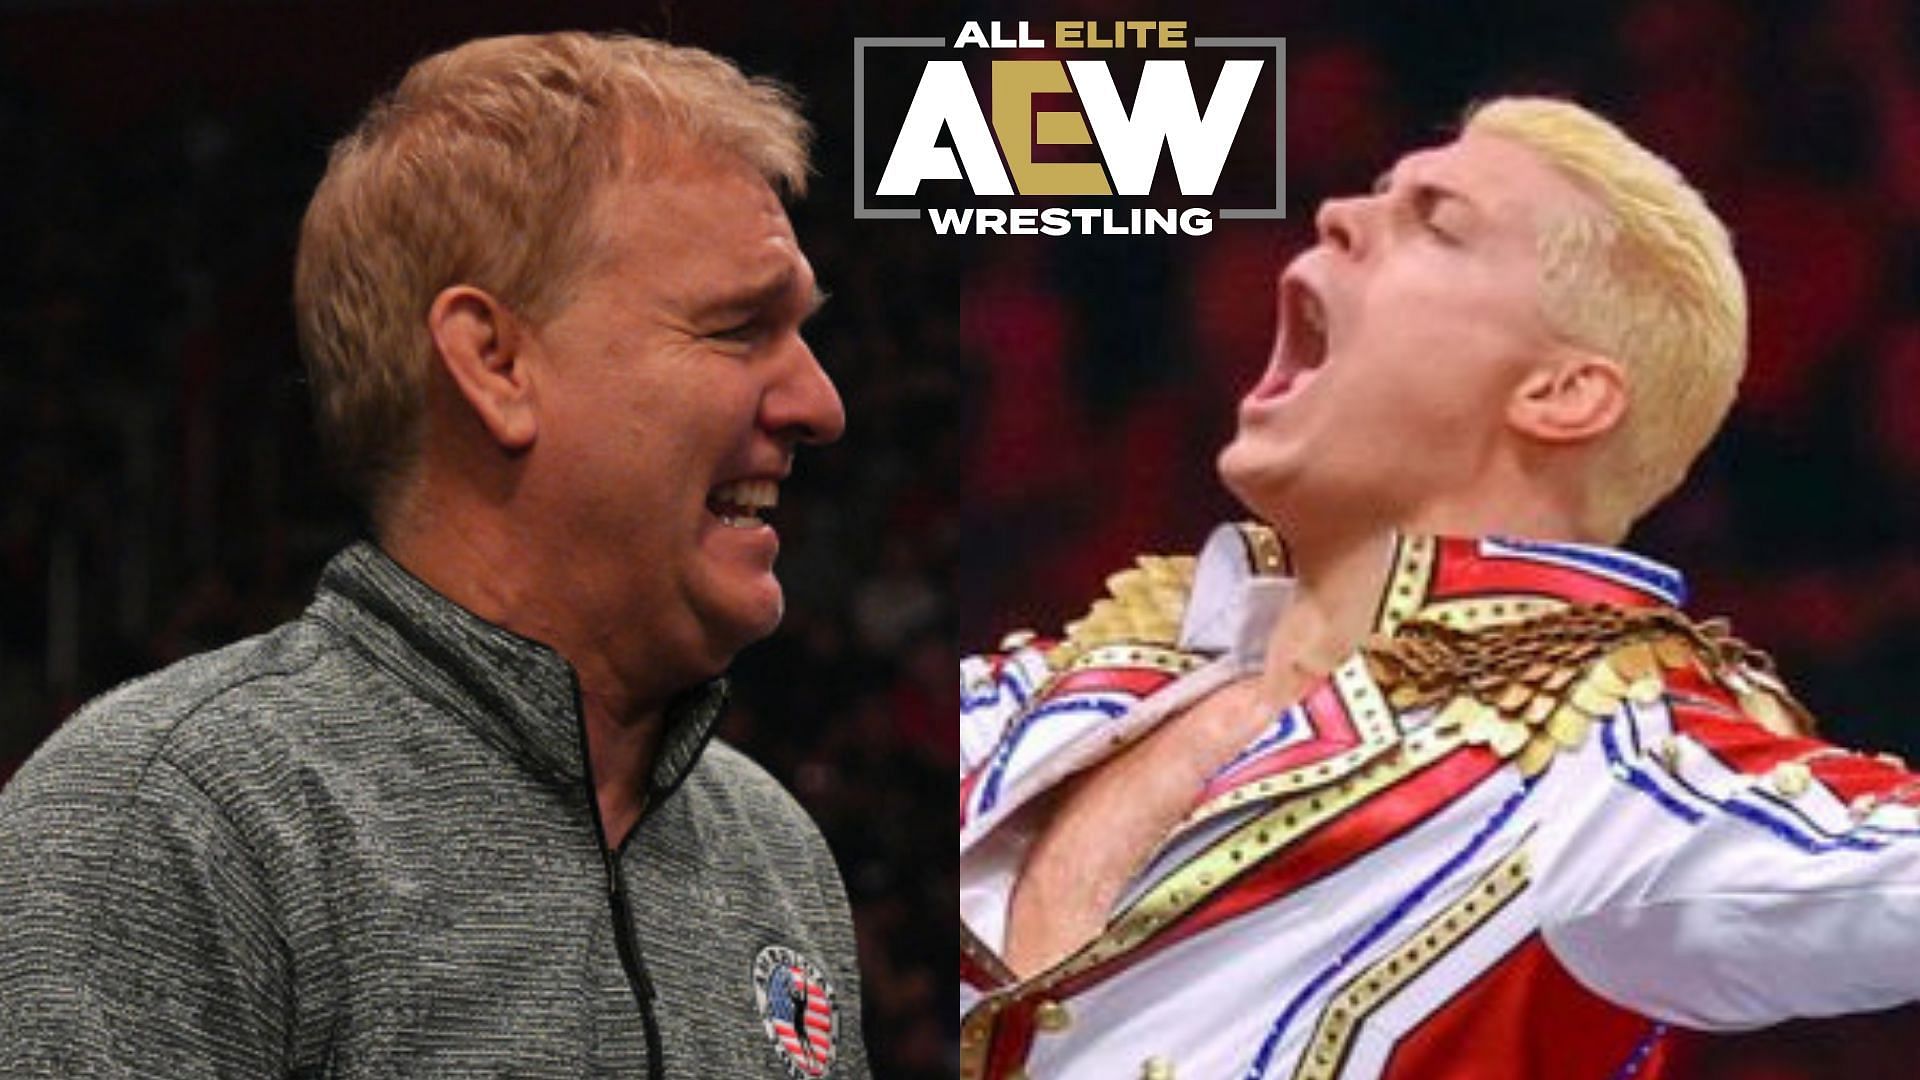 What would Dan Lambert do if he managed Cody Rhodes in AEW?